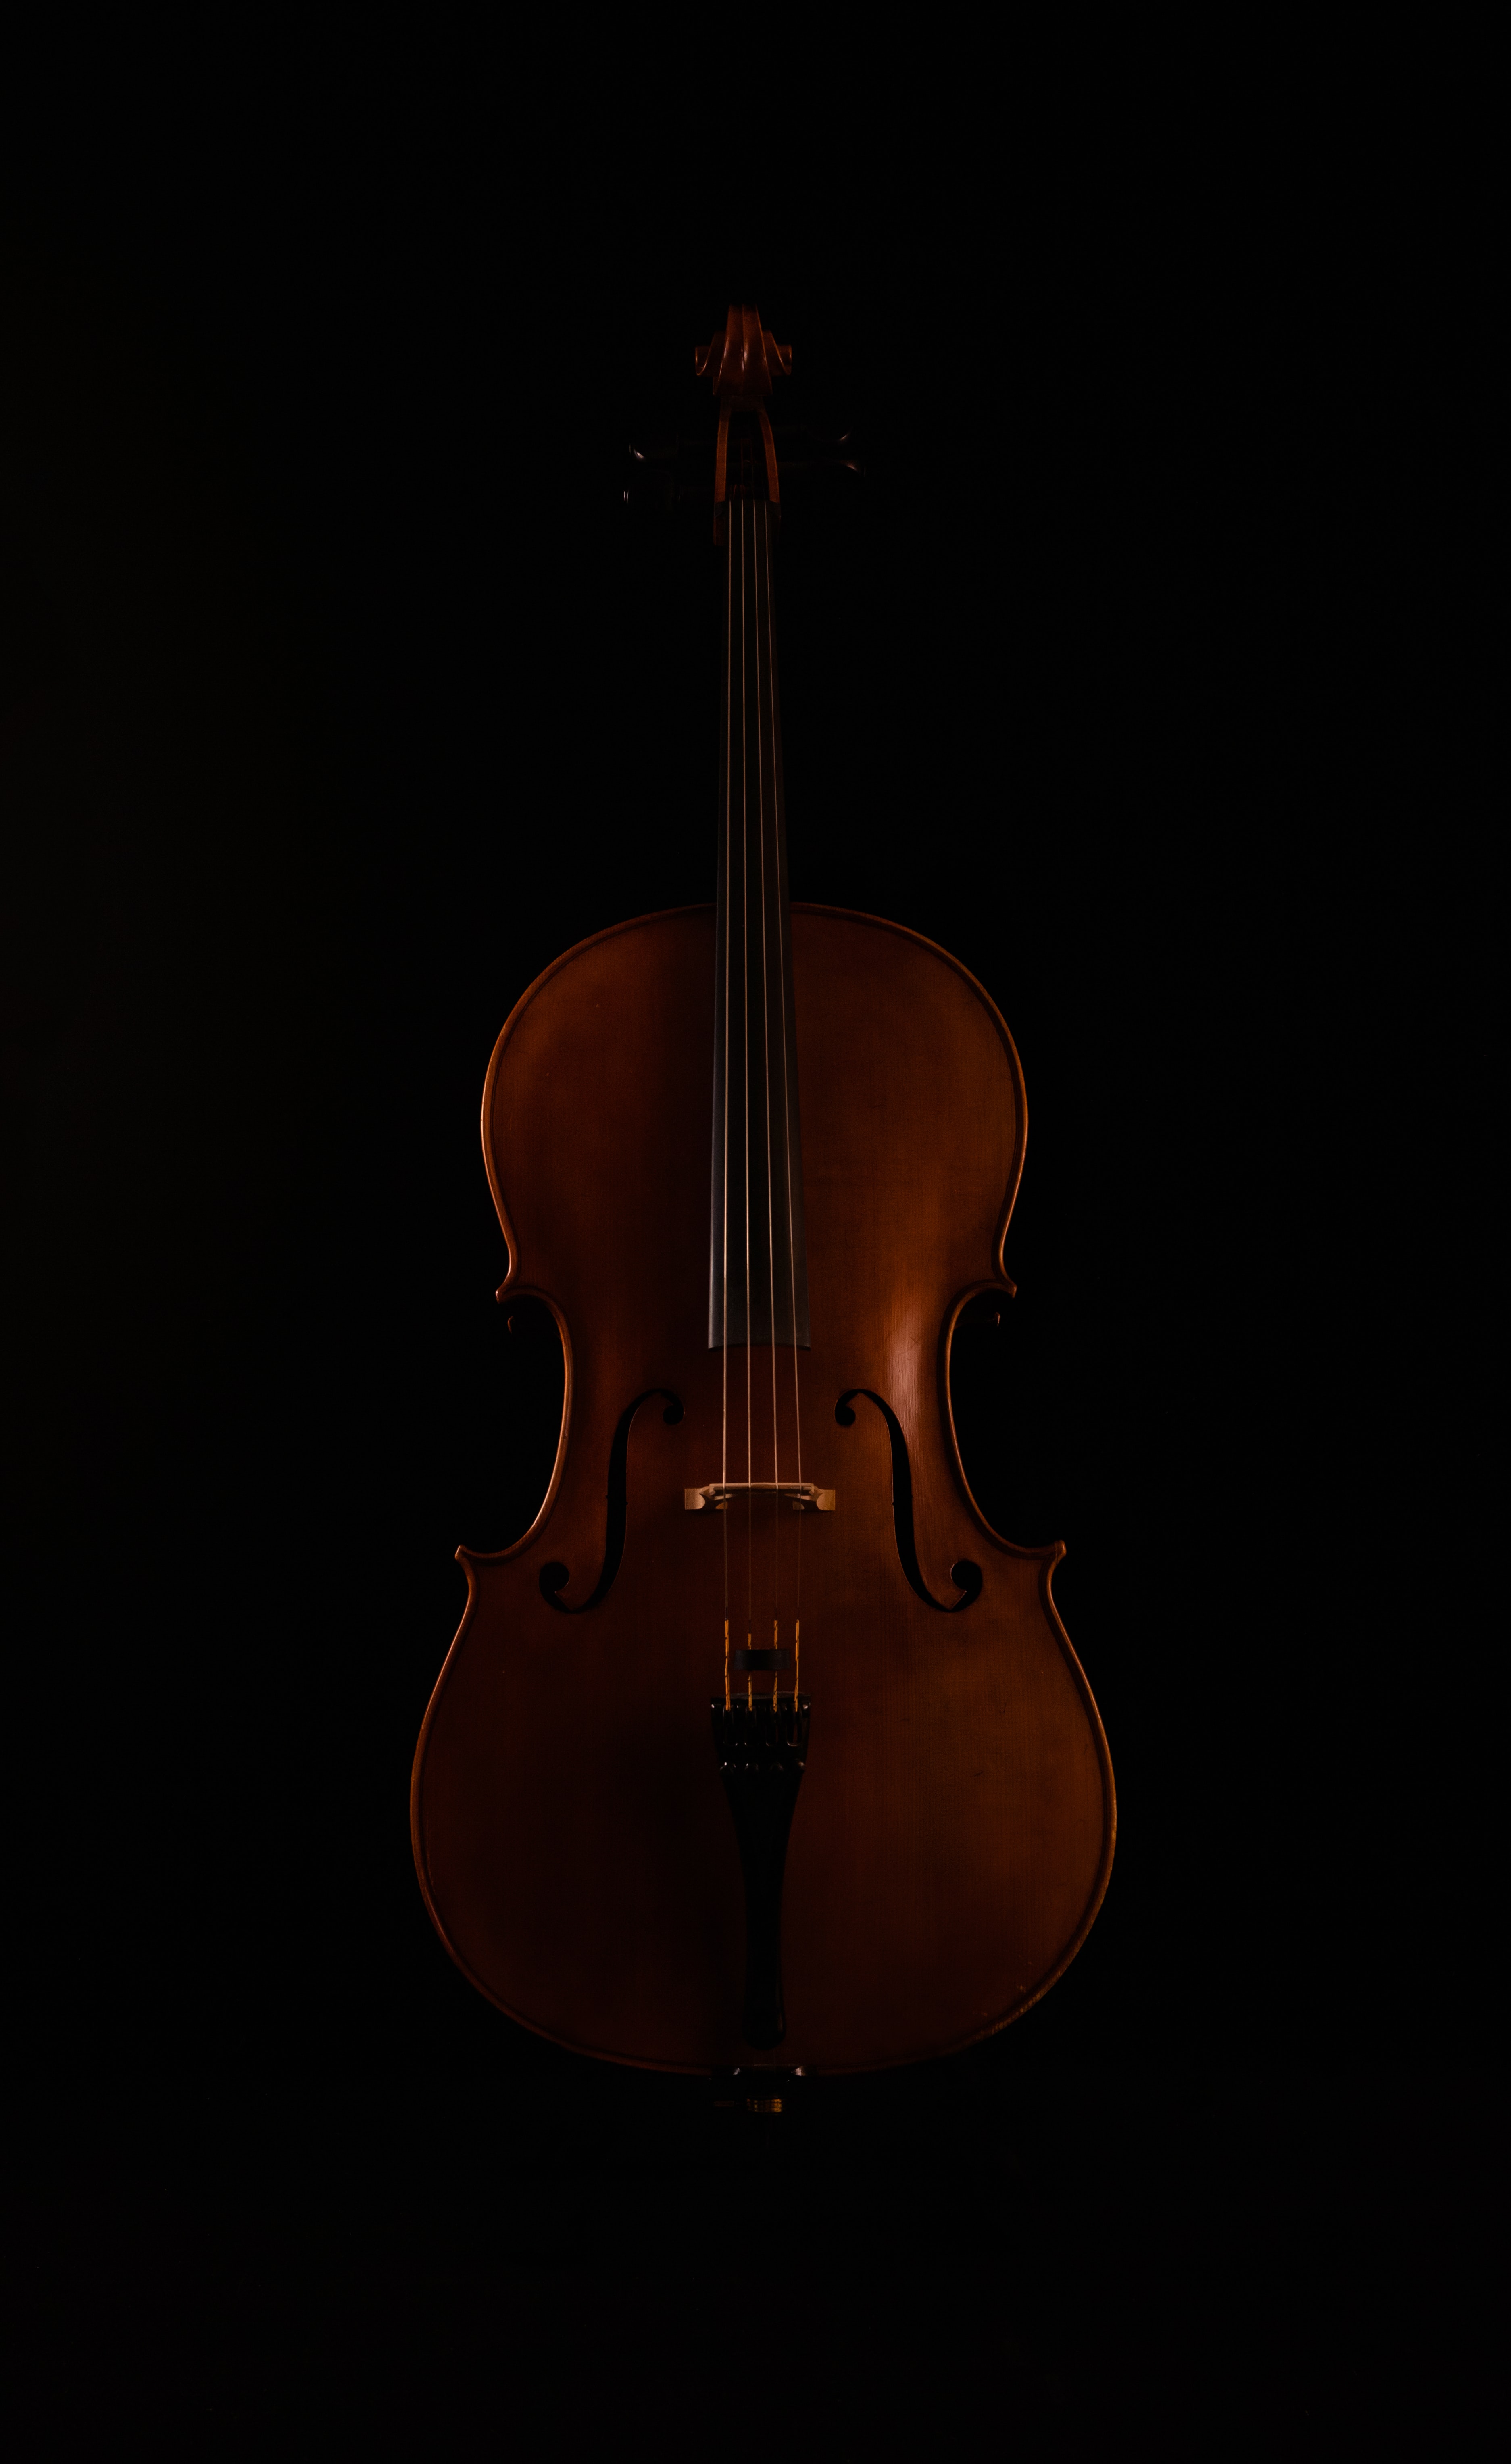 136117 descargar imagen instrumento musical, música, oscuro, violín: fondos de pantalla y protectores de pantalla gratis